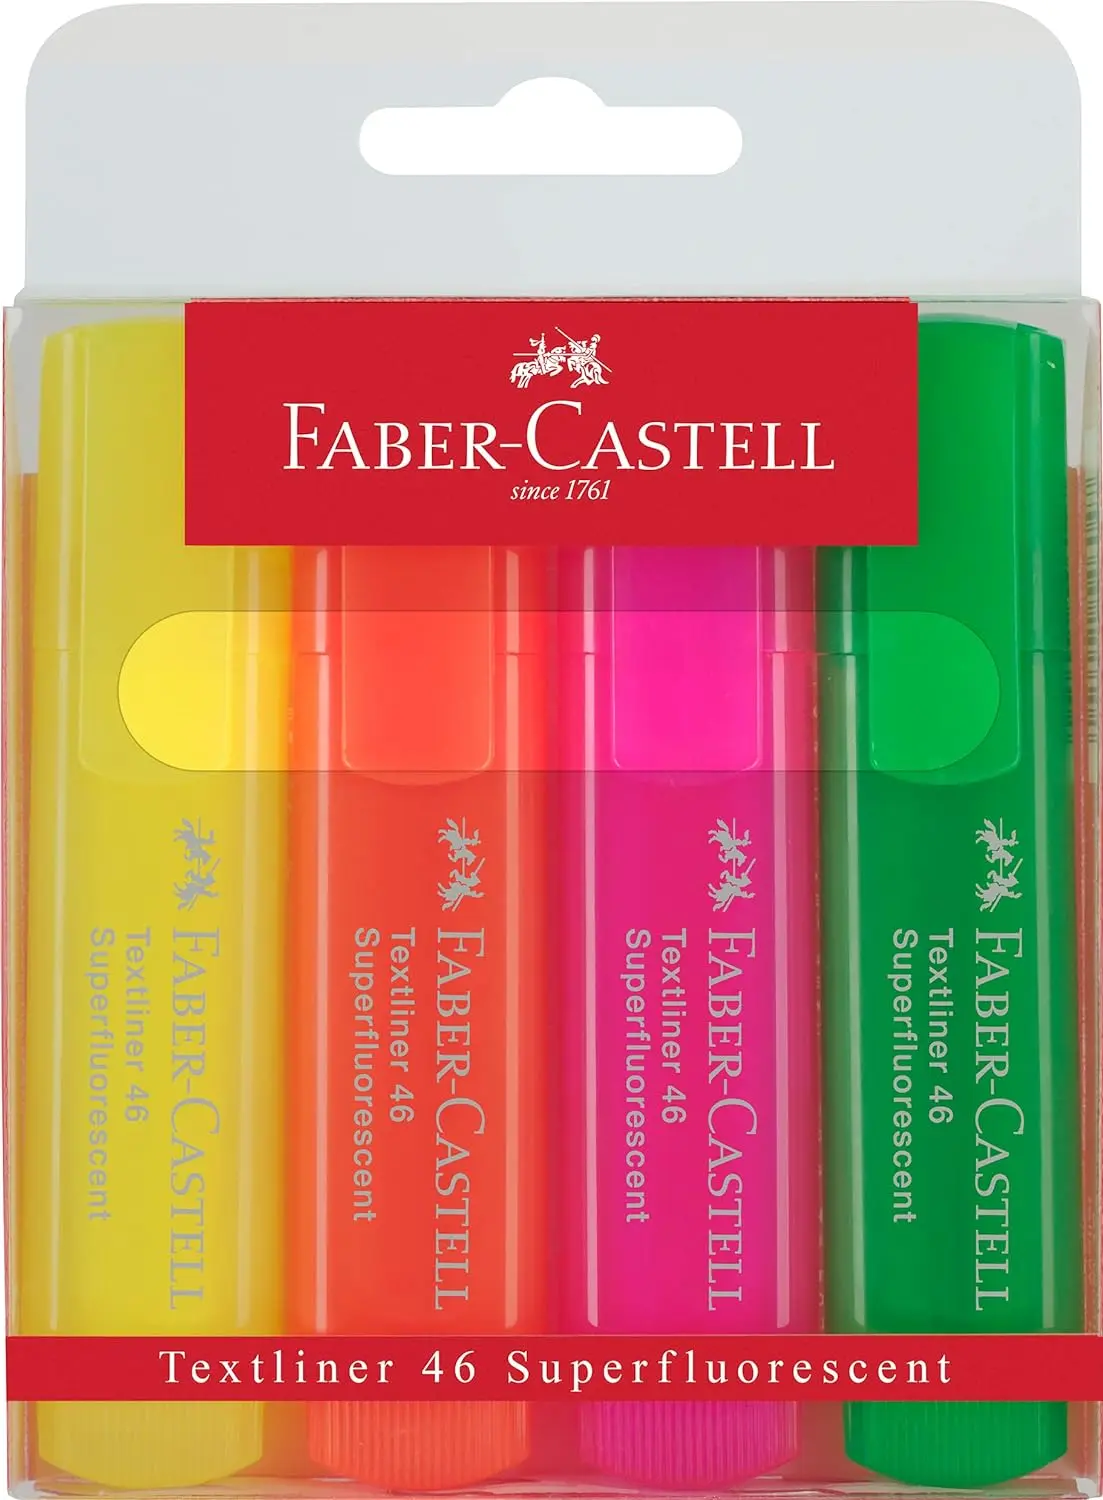 Faber-Castell Textliner 46 Superfluorescente Pack de 4 Marcadores Fluorescentes - Punta Biselada - T